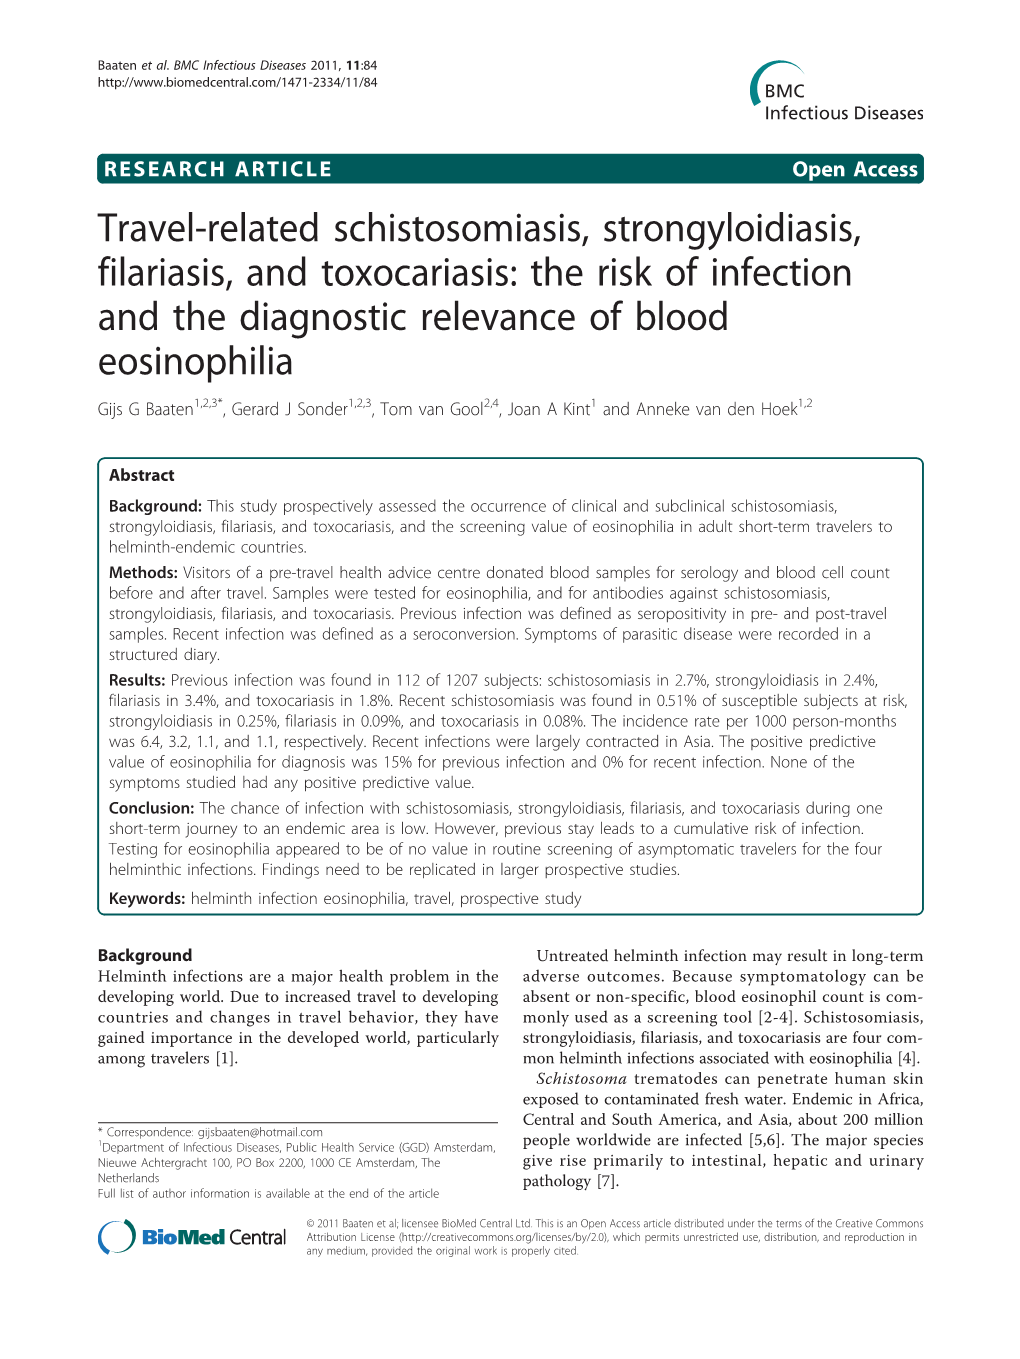 Travel-Related Schistosomiasis, Strongyloidiasis, Filariasis, And